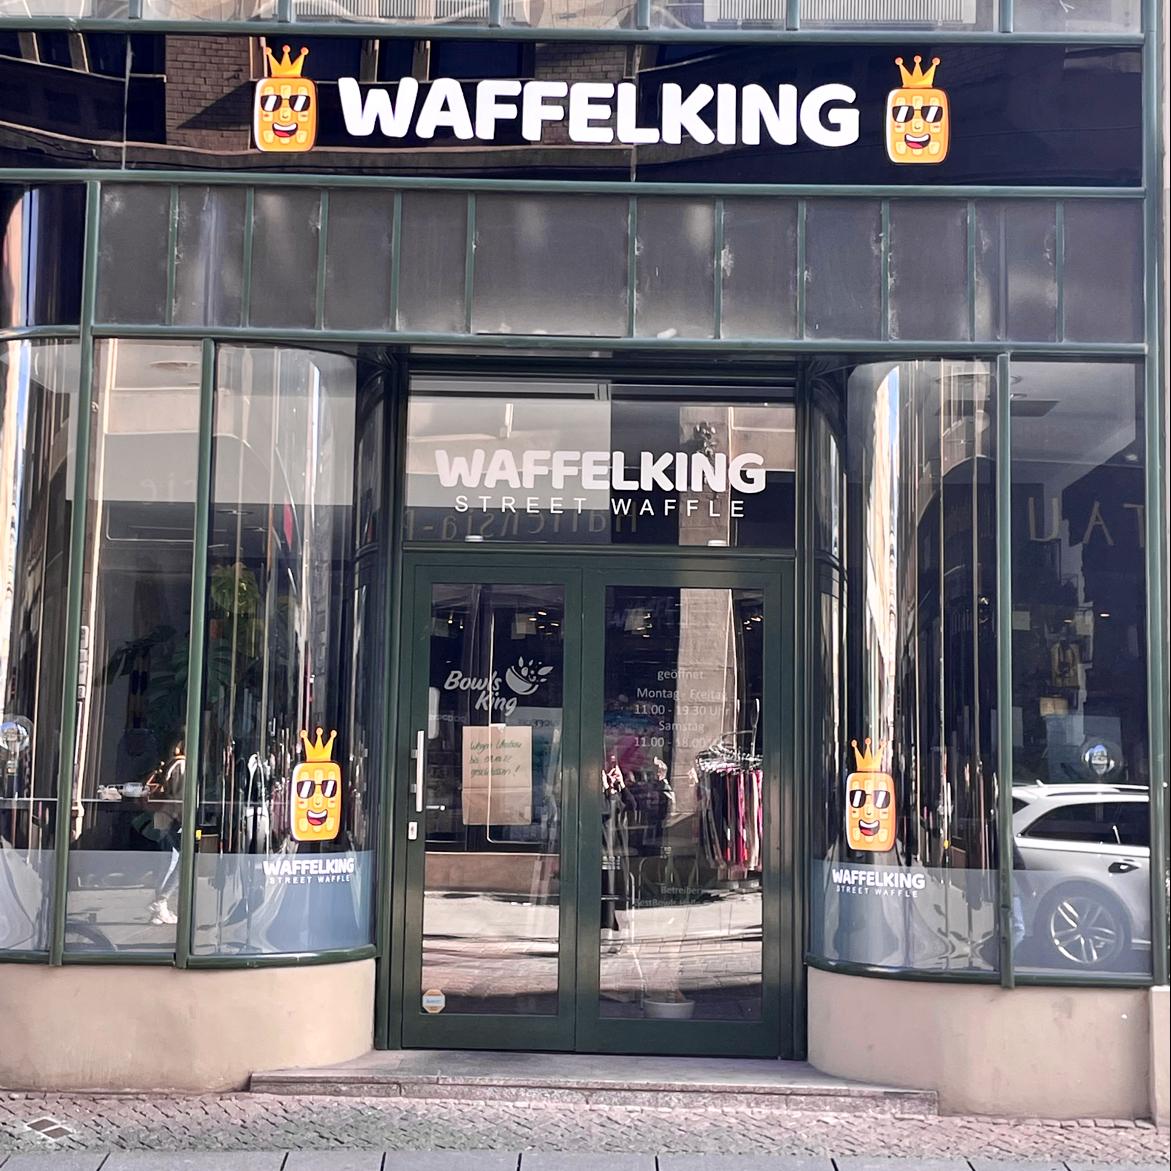 Restaurant "WaffelKing" in Halle (Saale)